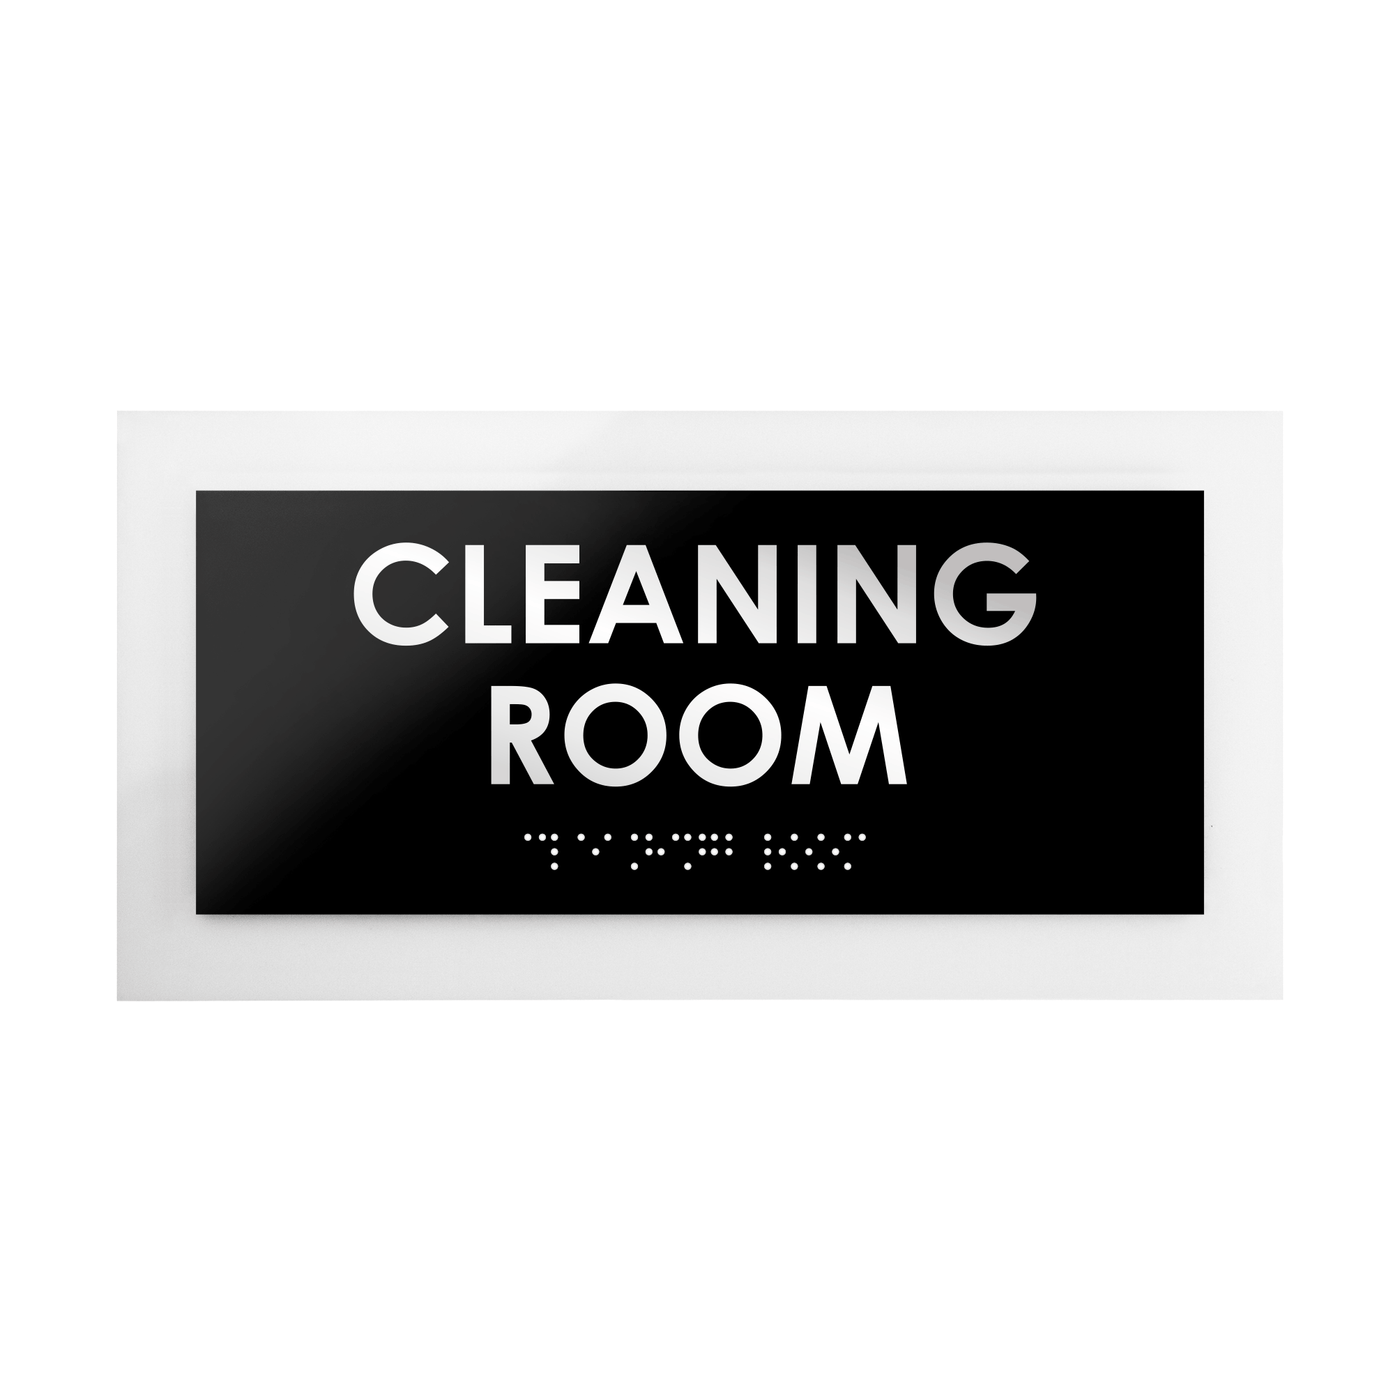 Acrylic Cleaning Room Door Sign - "Simple" Design